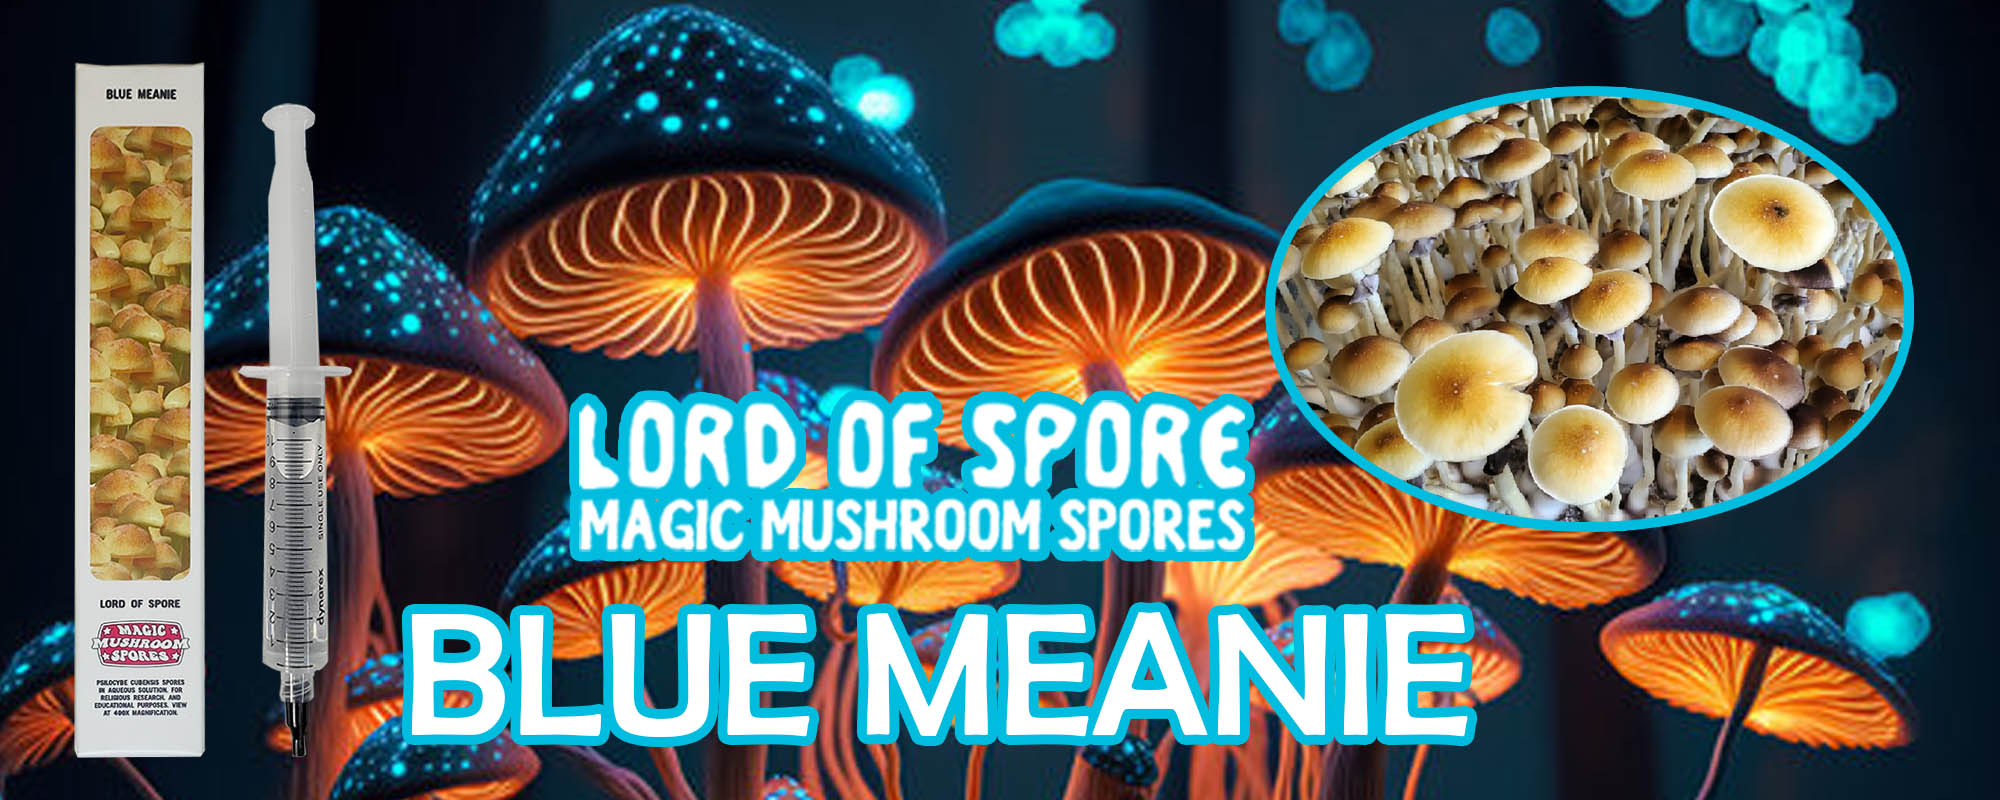 Lord of Spore Blue Meanie Magic Mushroom Spores